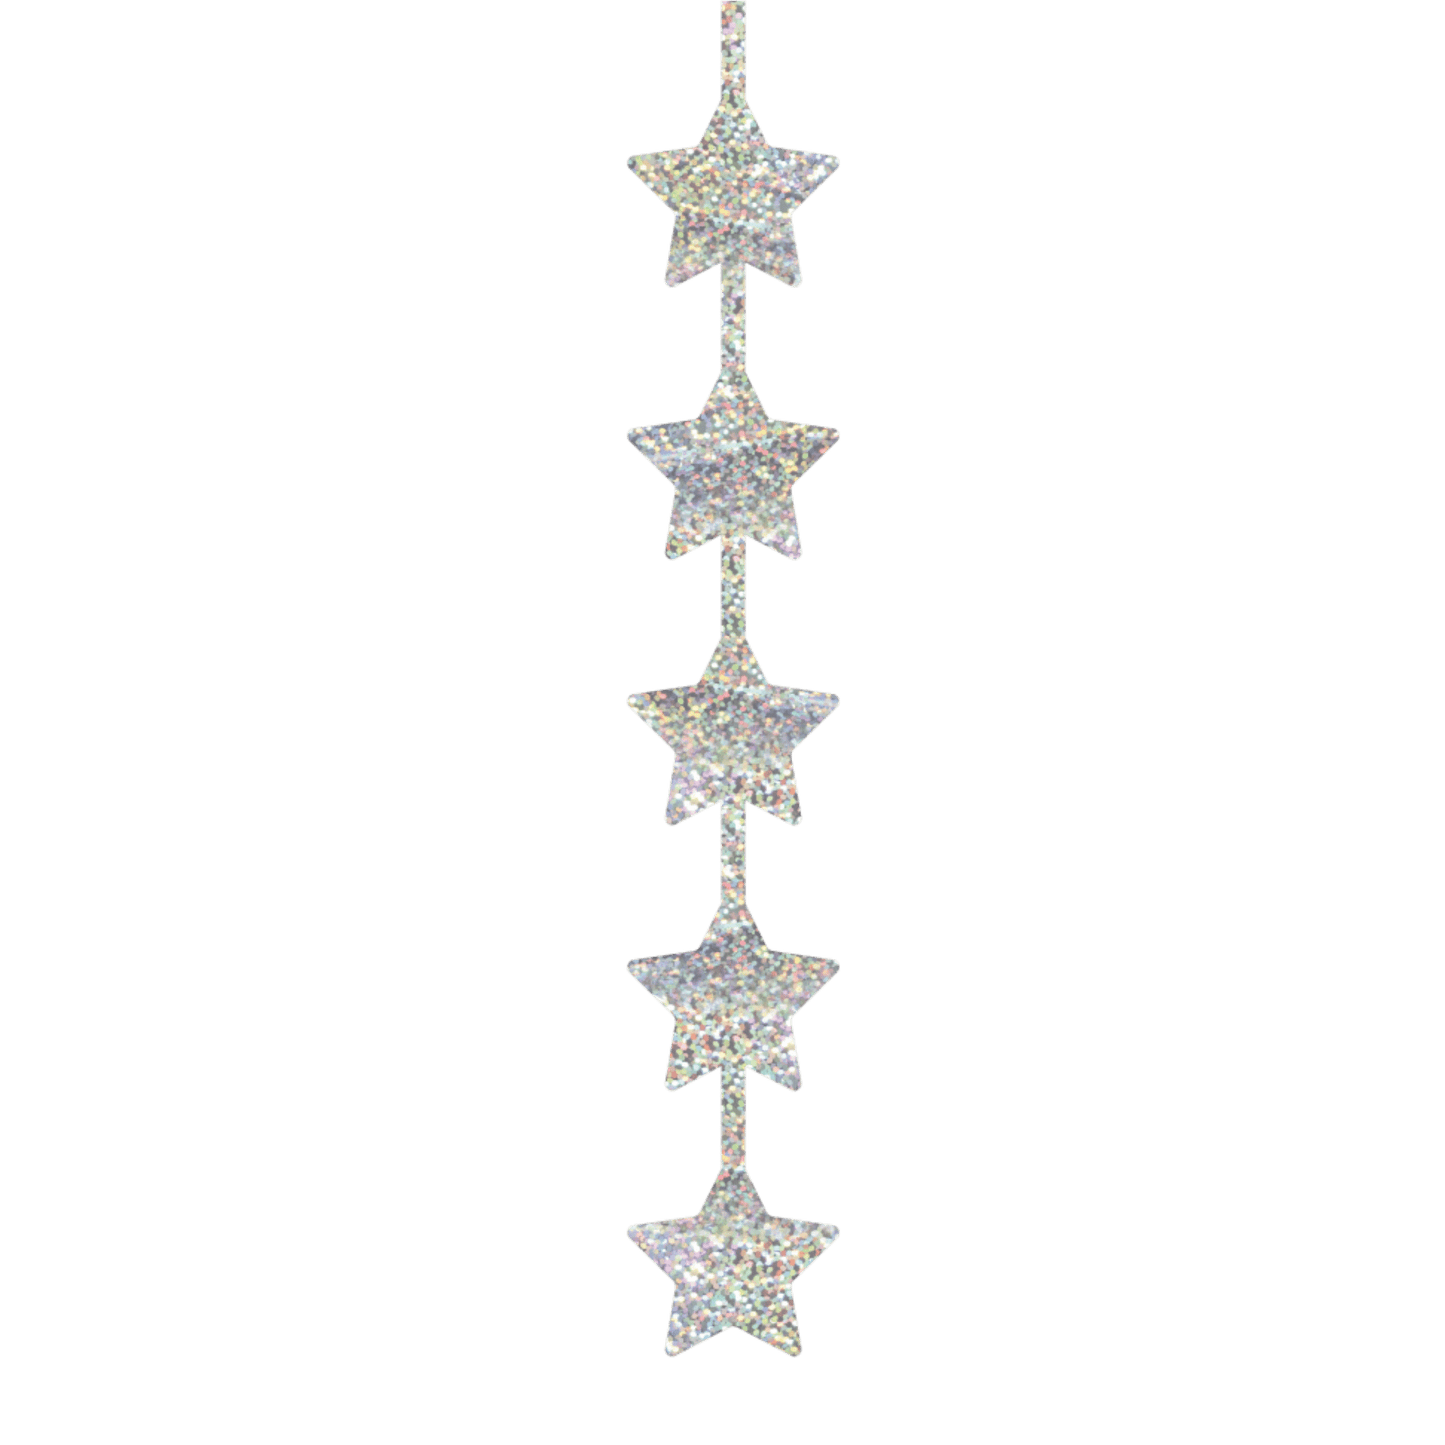 Comemoratio Fita Decorativa Metalizada Ano Novo Estrela Glitter Prata